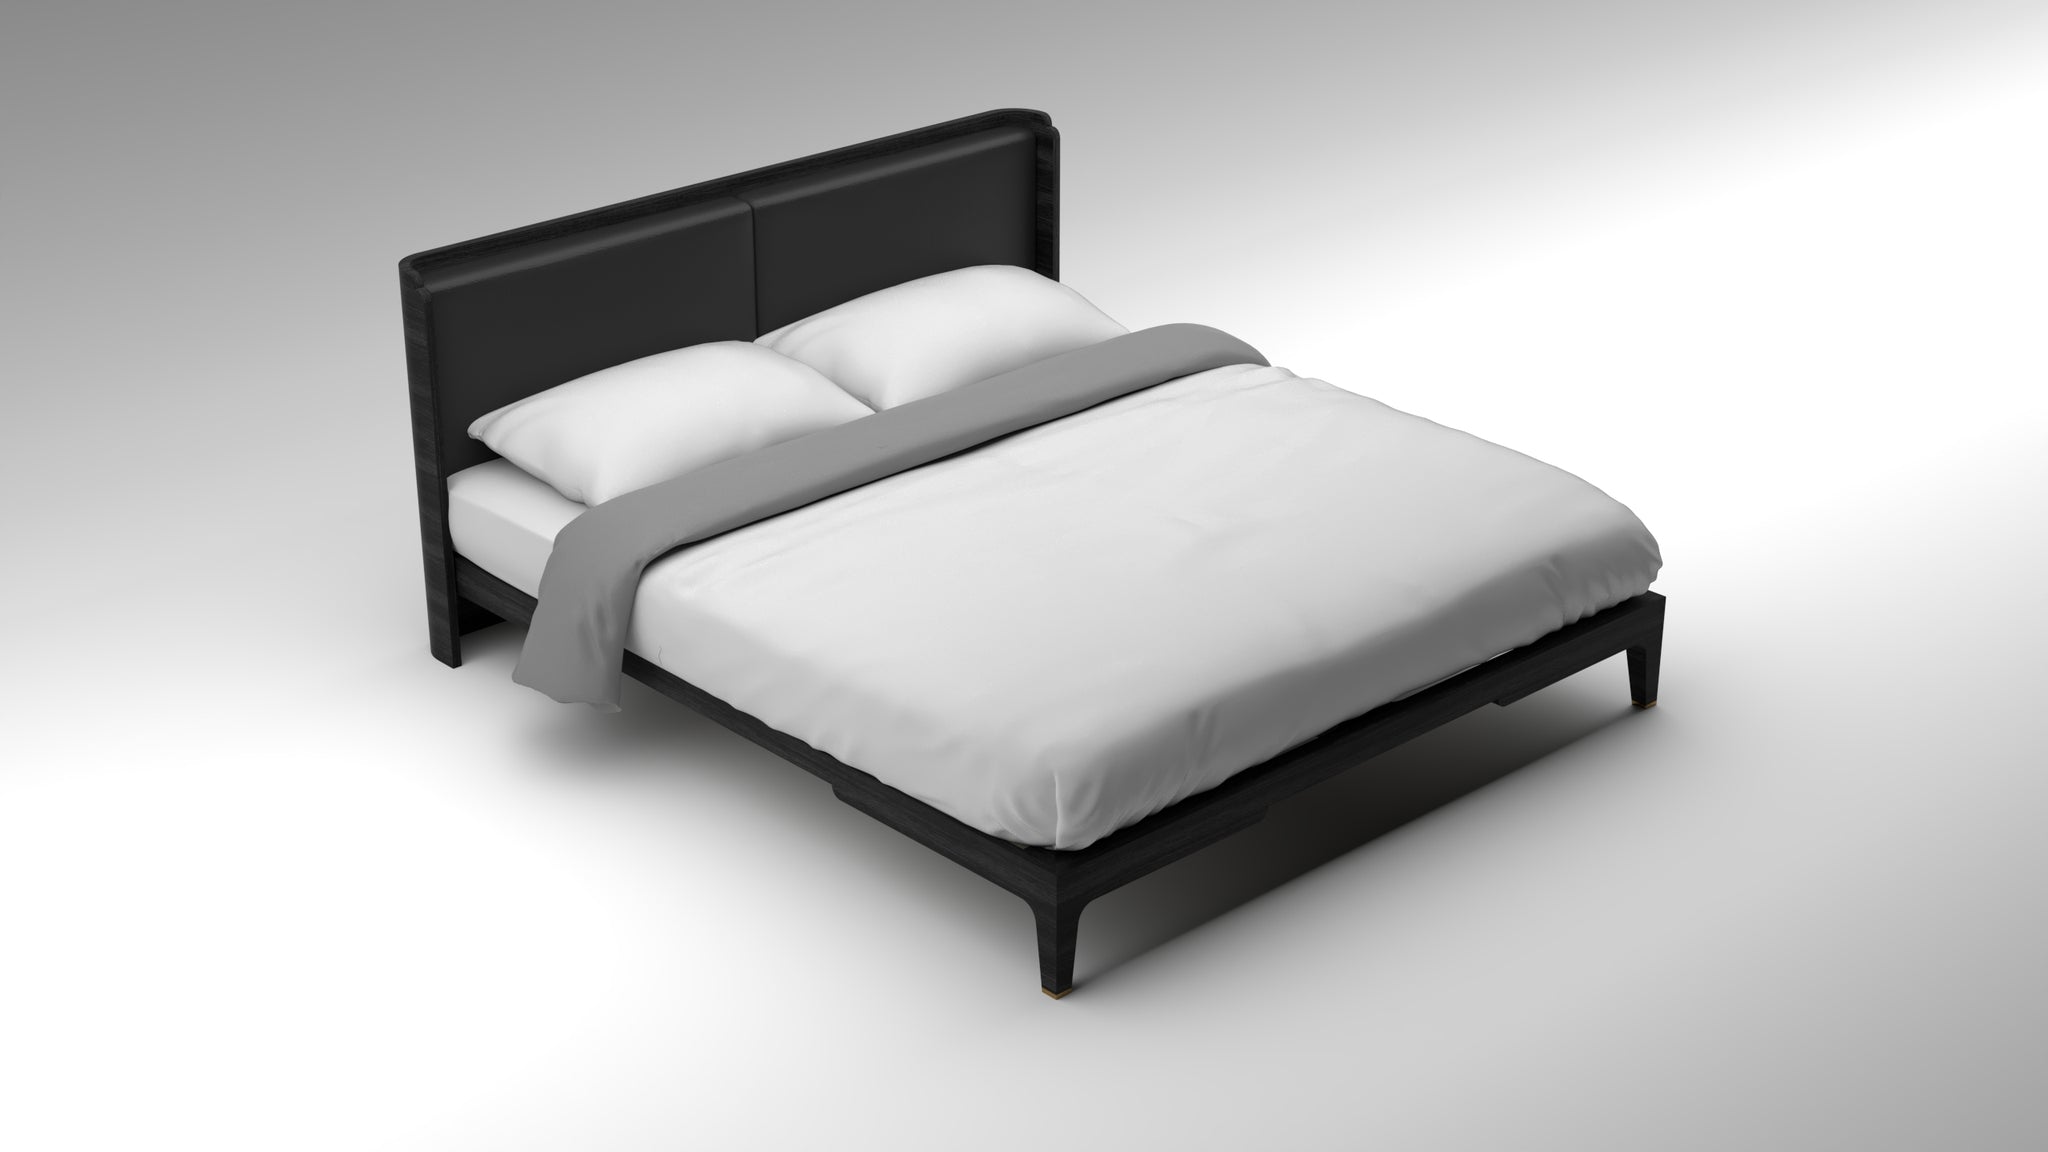 akar bed, guimar bed, black bed frame, anthracite bed frame, leather upholstery headboard, minimalist design